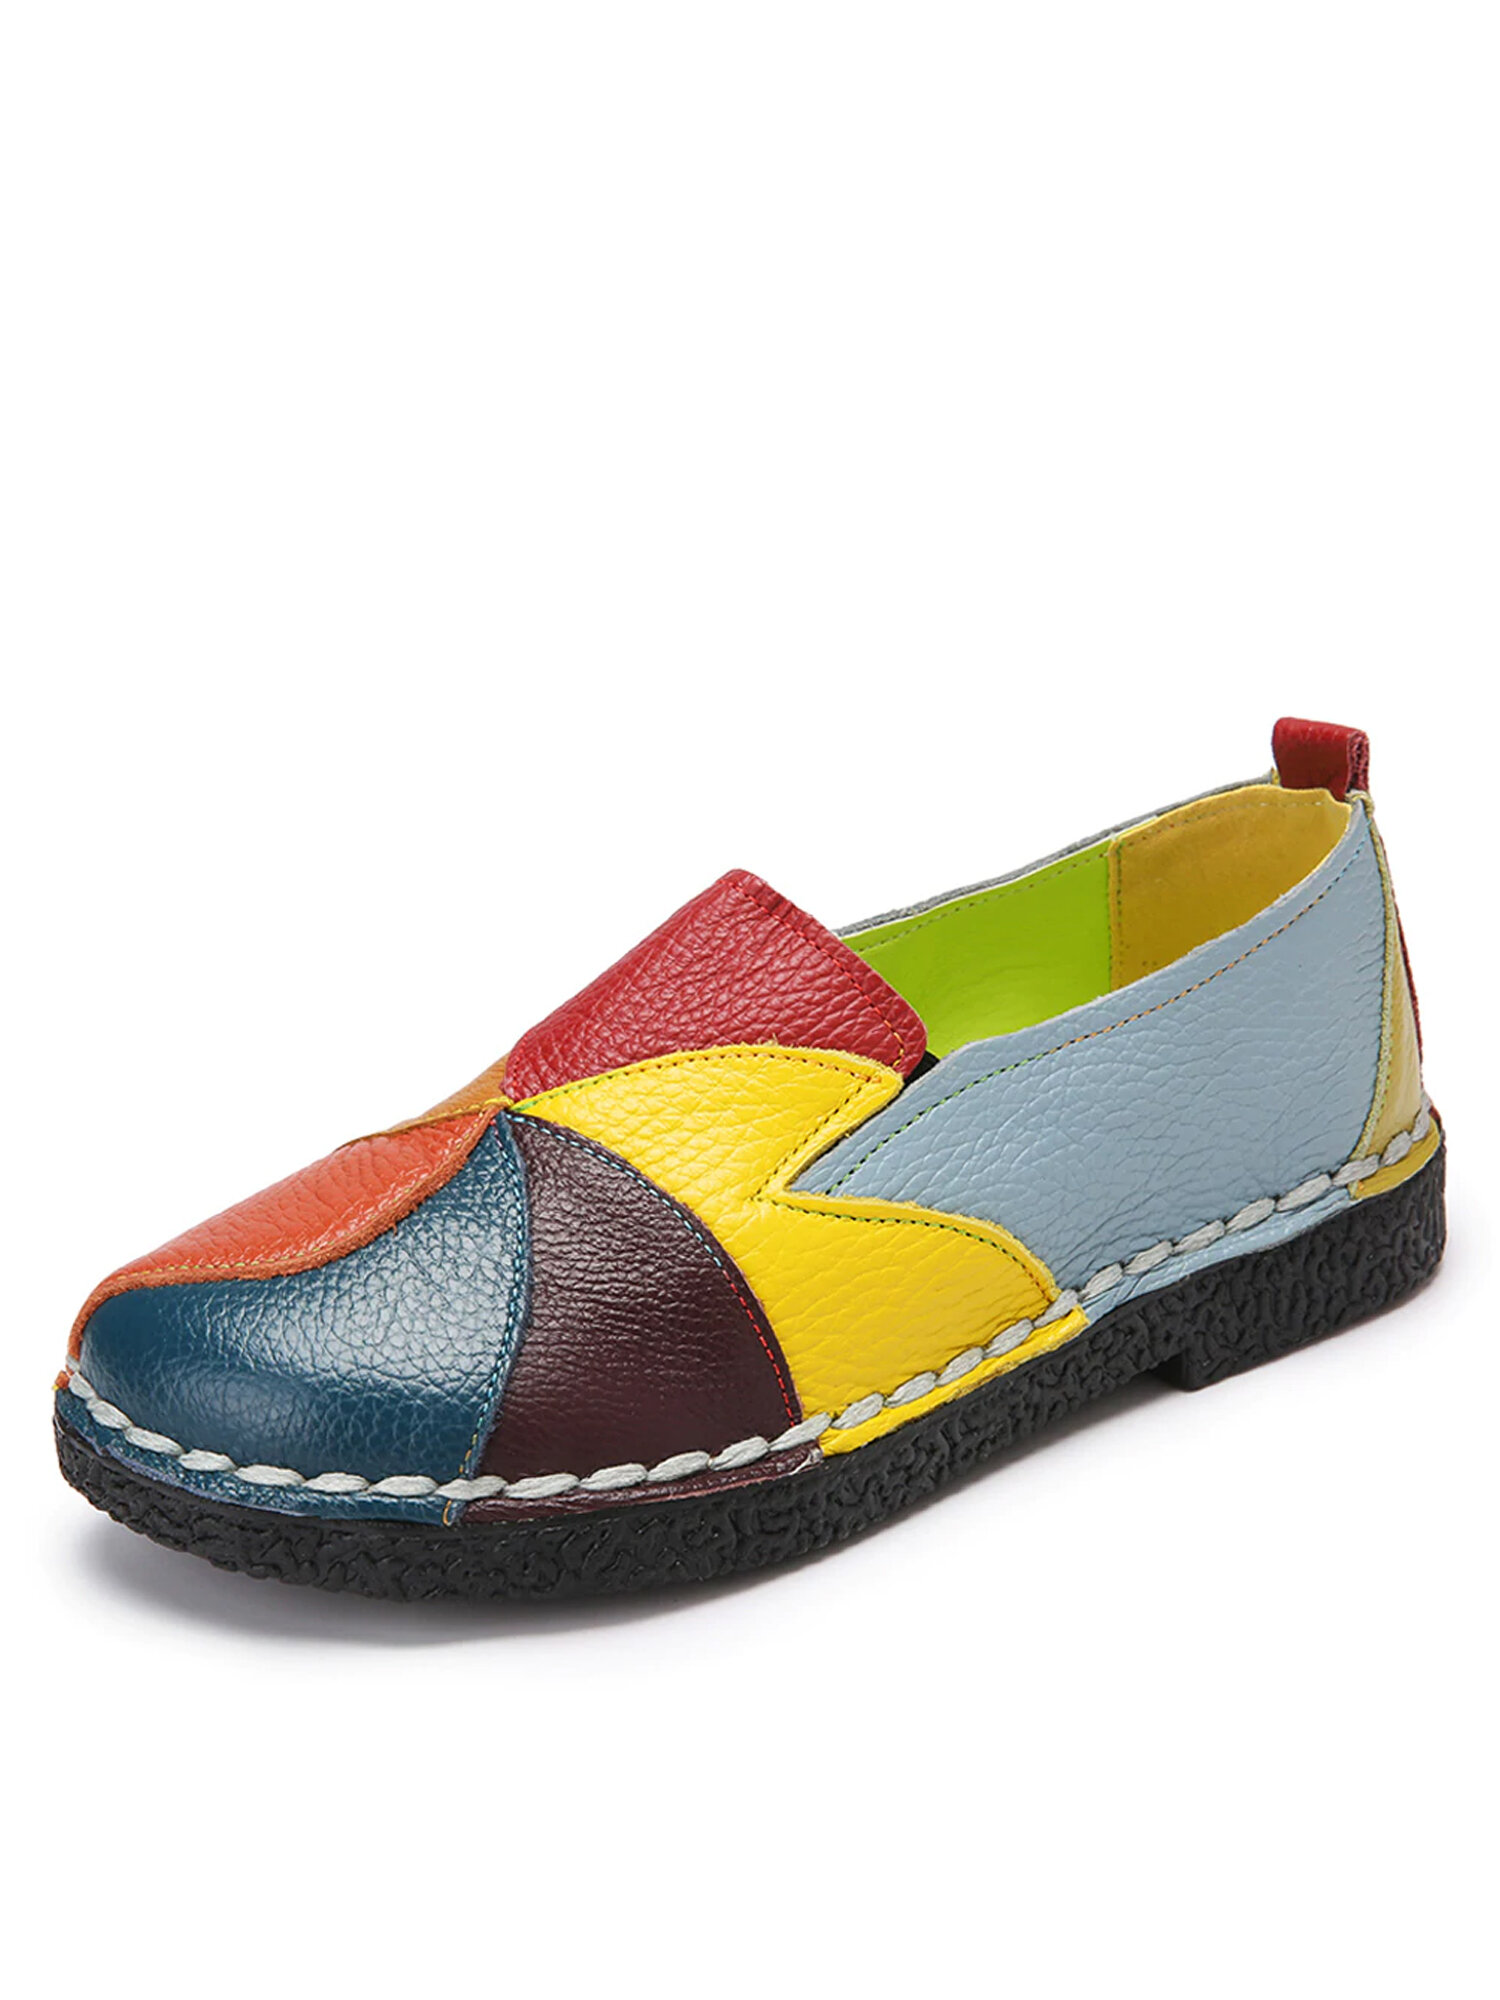 SOCOFY Soft اليدوية الربط Colorful جلد طبيعي خياطة الانزلاق على حذاء بدون كعب مسطح غير رسمي